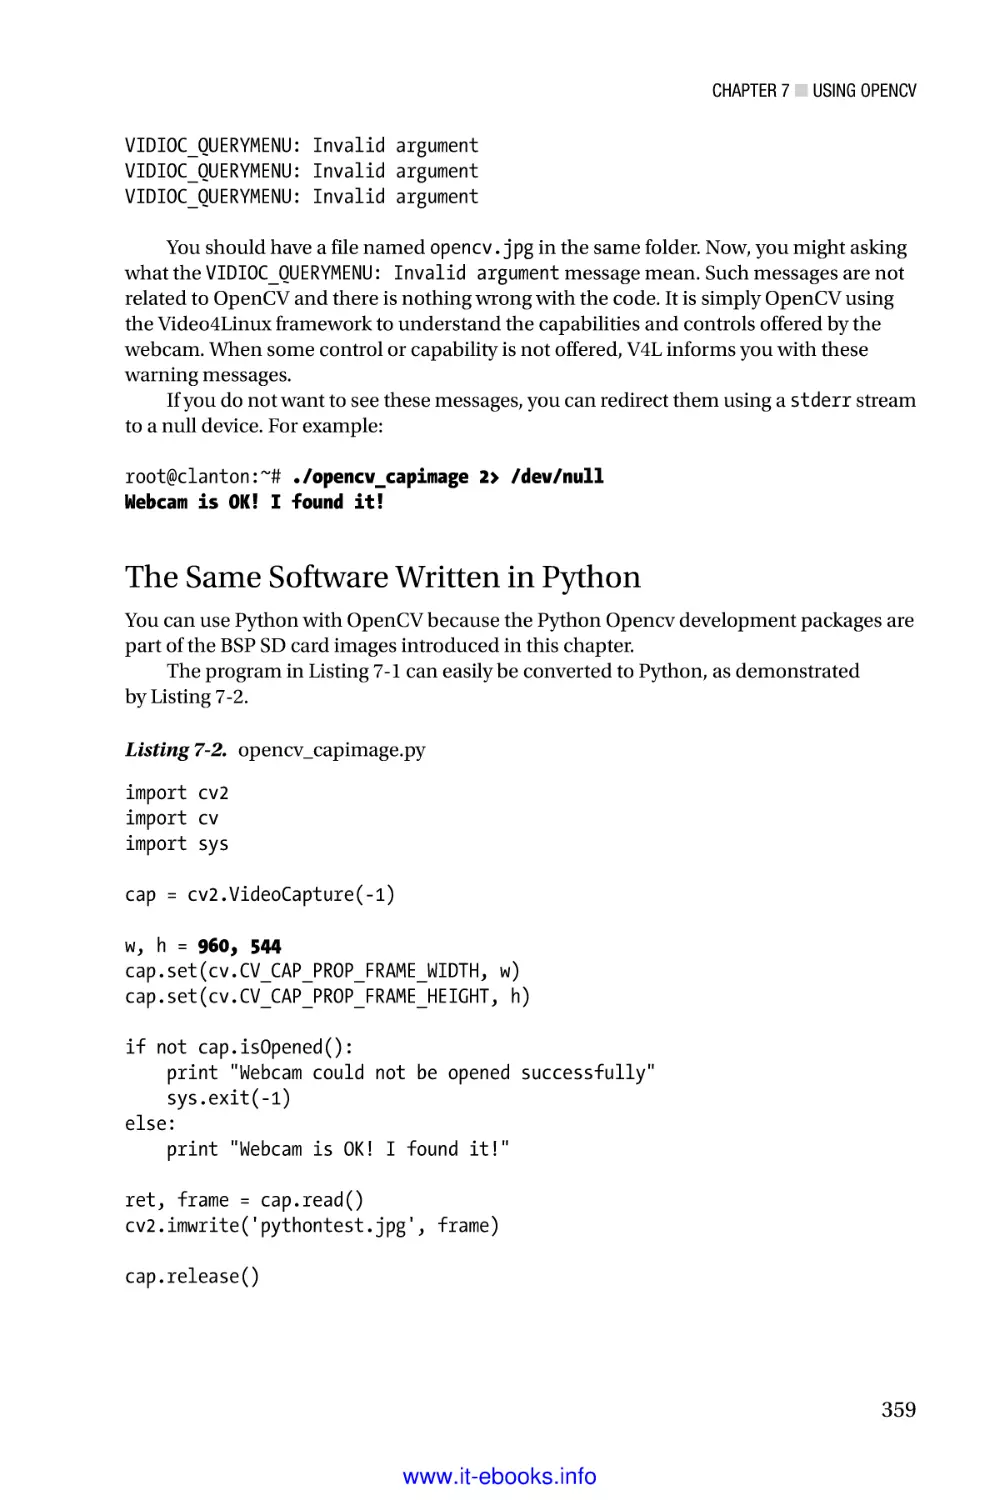 The Same Software Written in Python